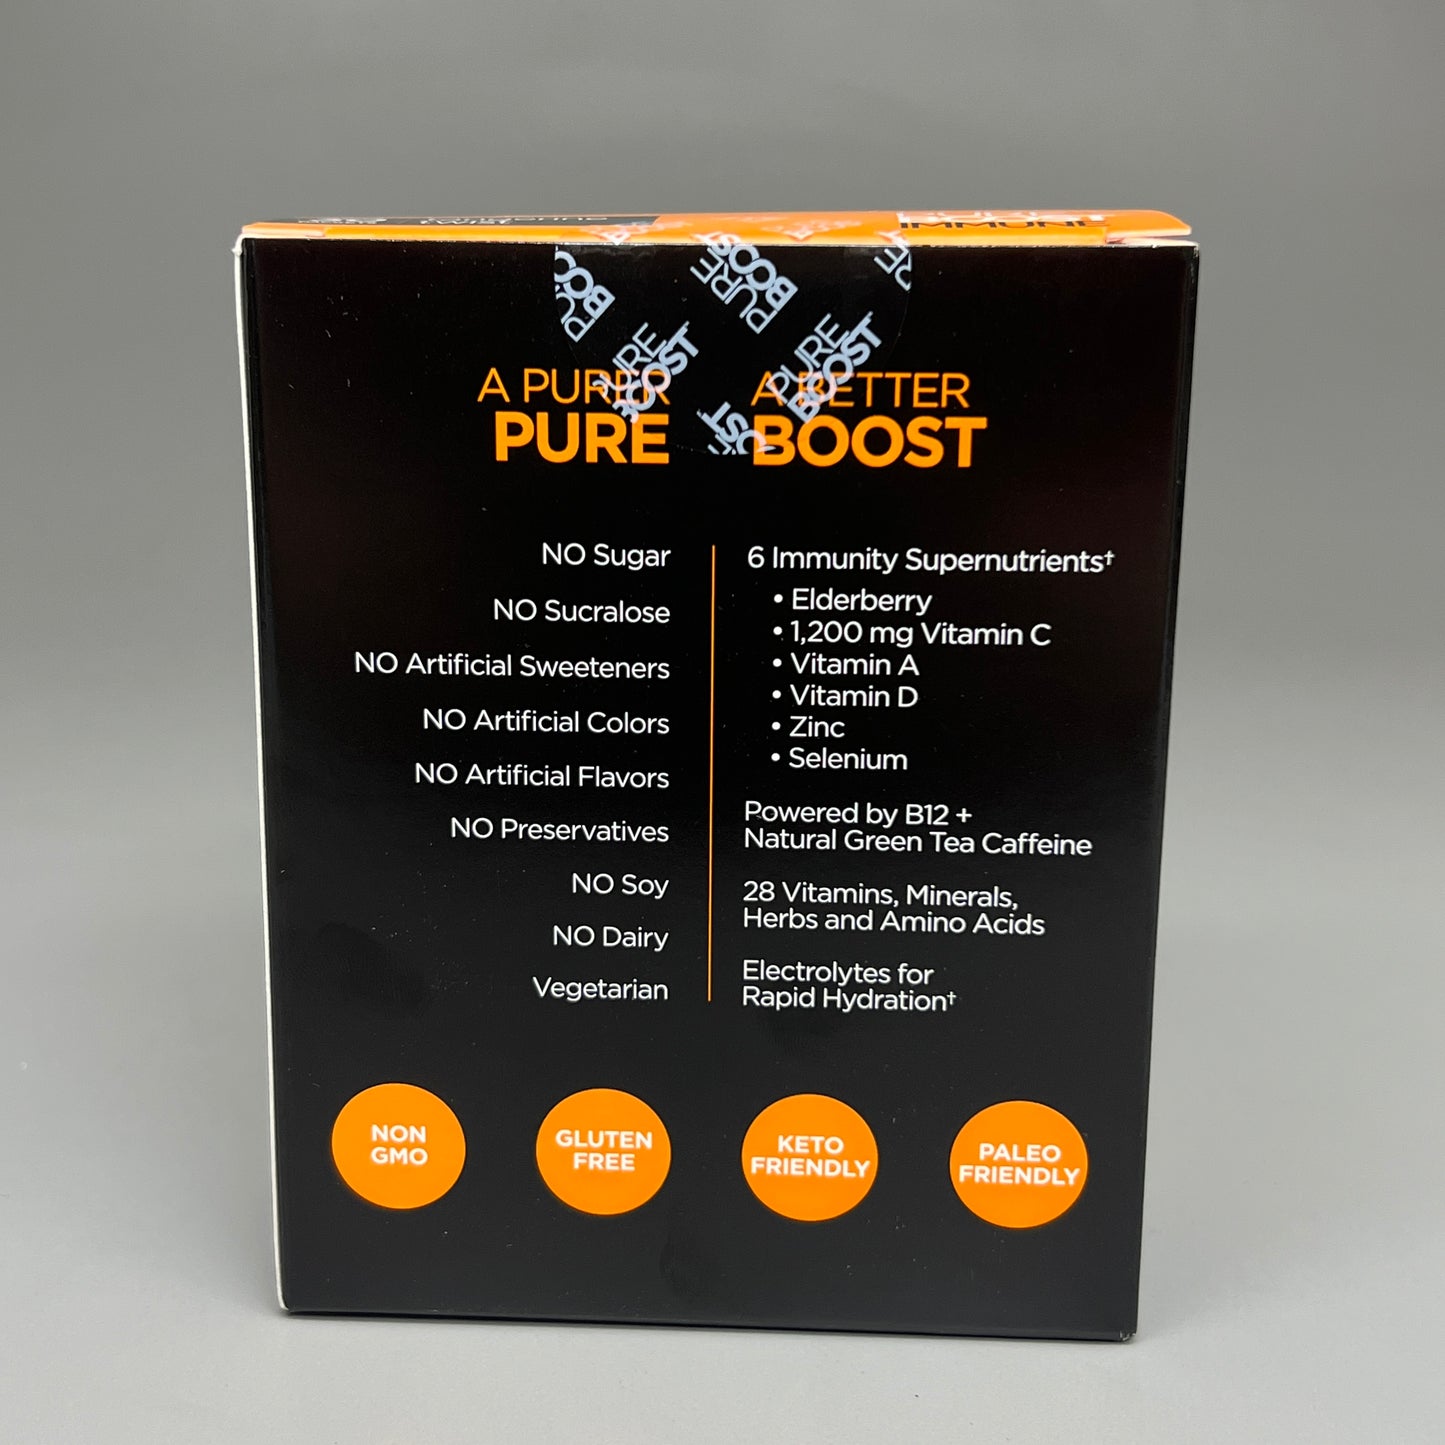 PUREBOOST IMMUNE Antioxidant Energy Mix 30 Packets Tangerine Twist 04/24 (New)